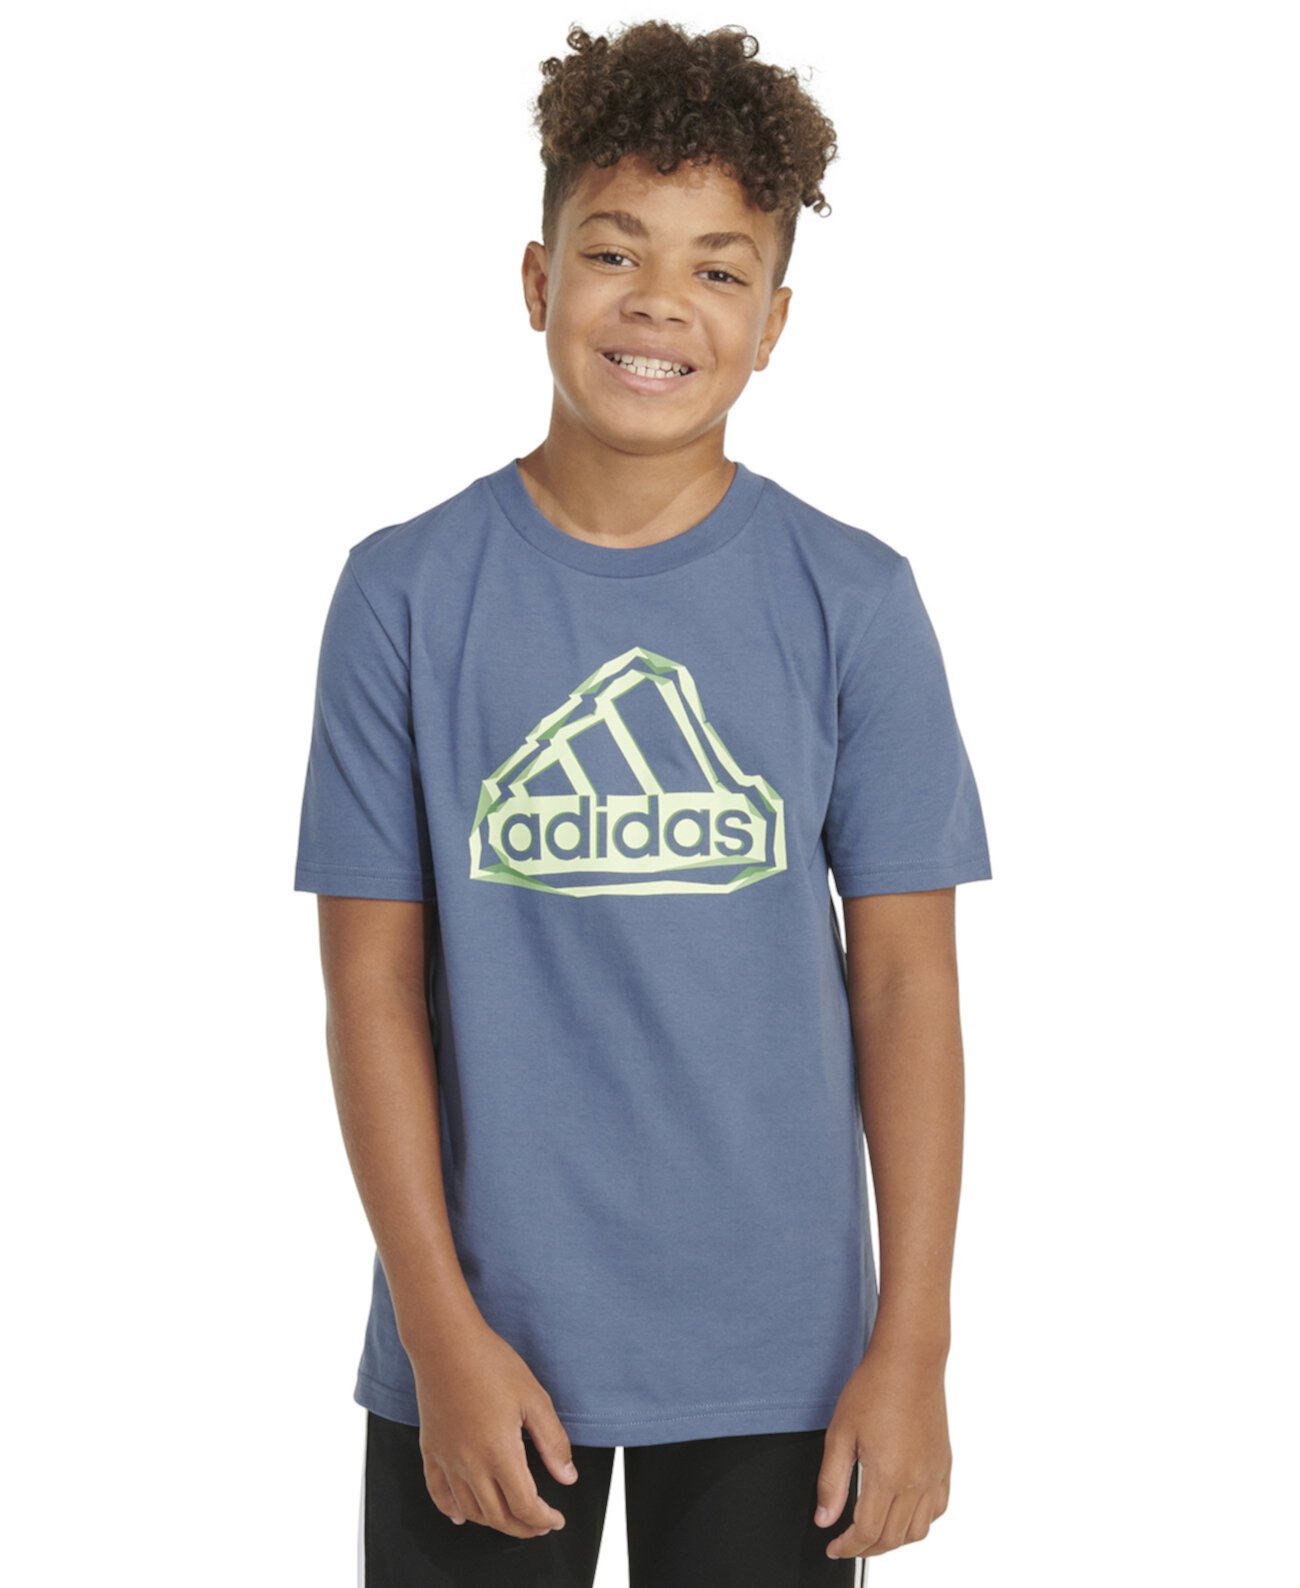 Big Boys Short-Sleeve Paper Graphic Cotton T-Shirt Adidas